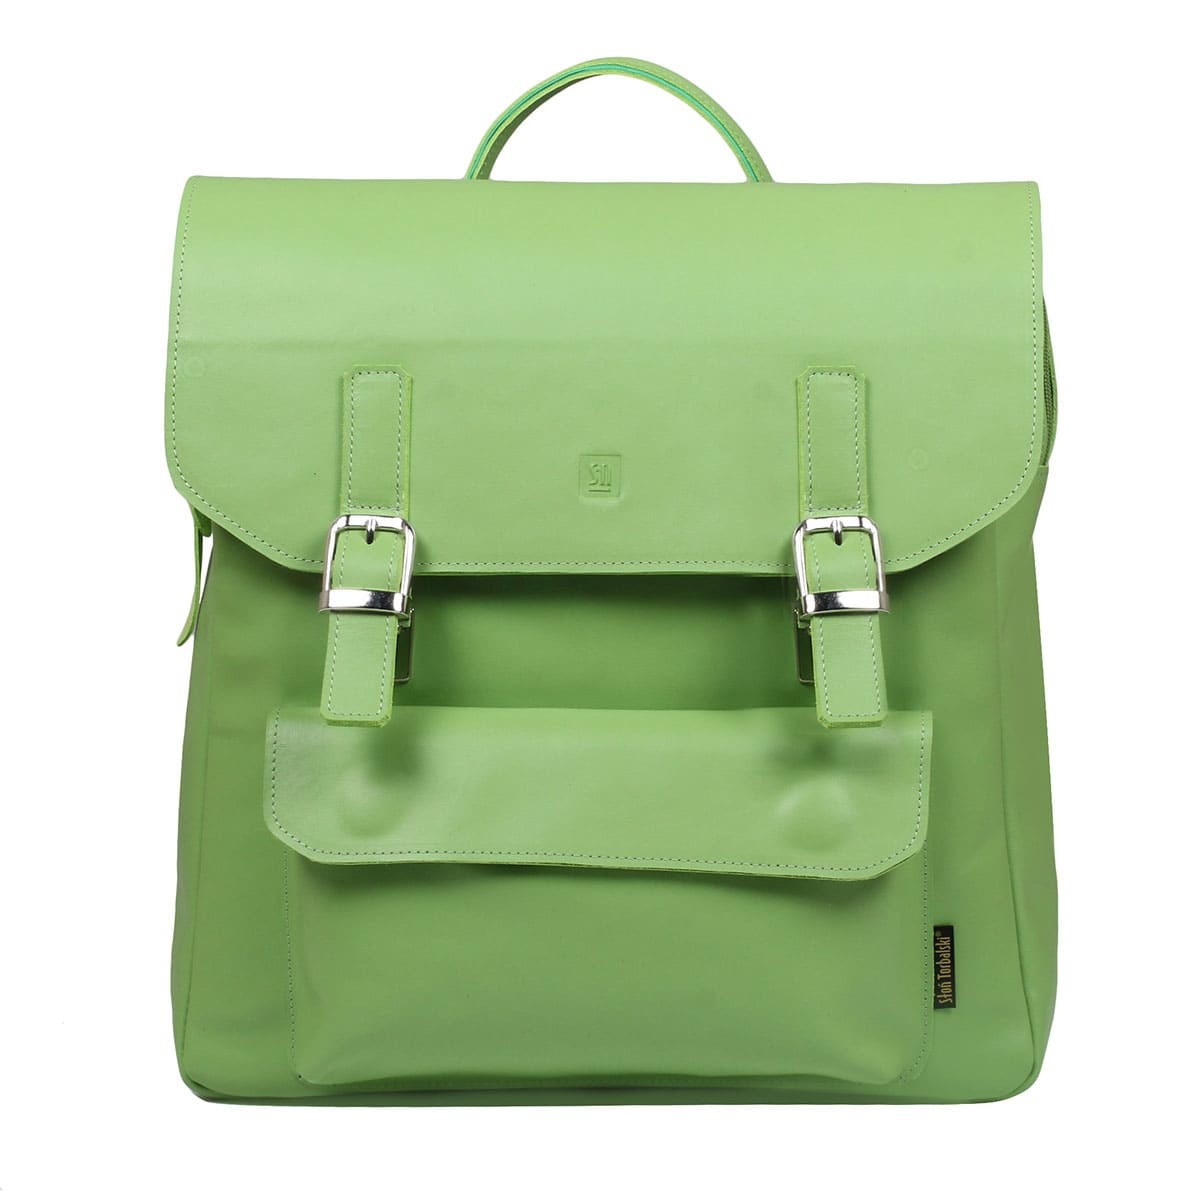 zielony-plecak-skorzany-A4-vintage-Teofila-00-208-0707-e15-351609p.jpg